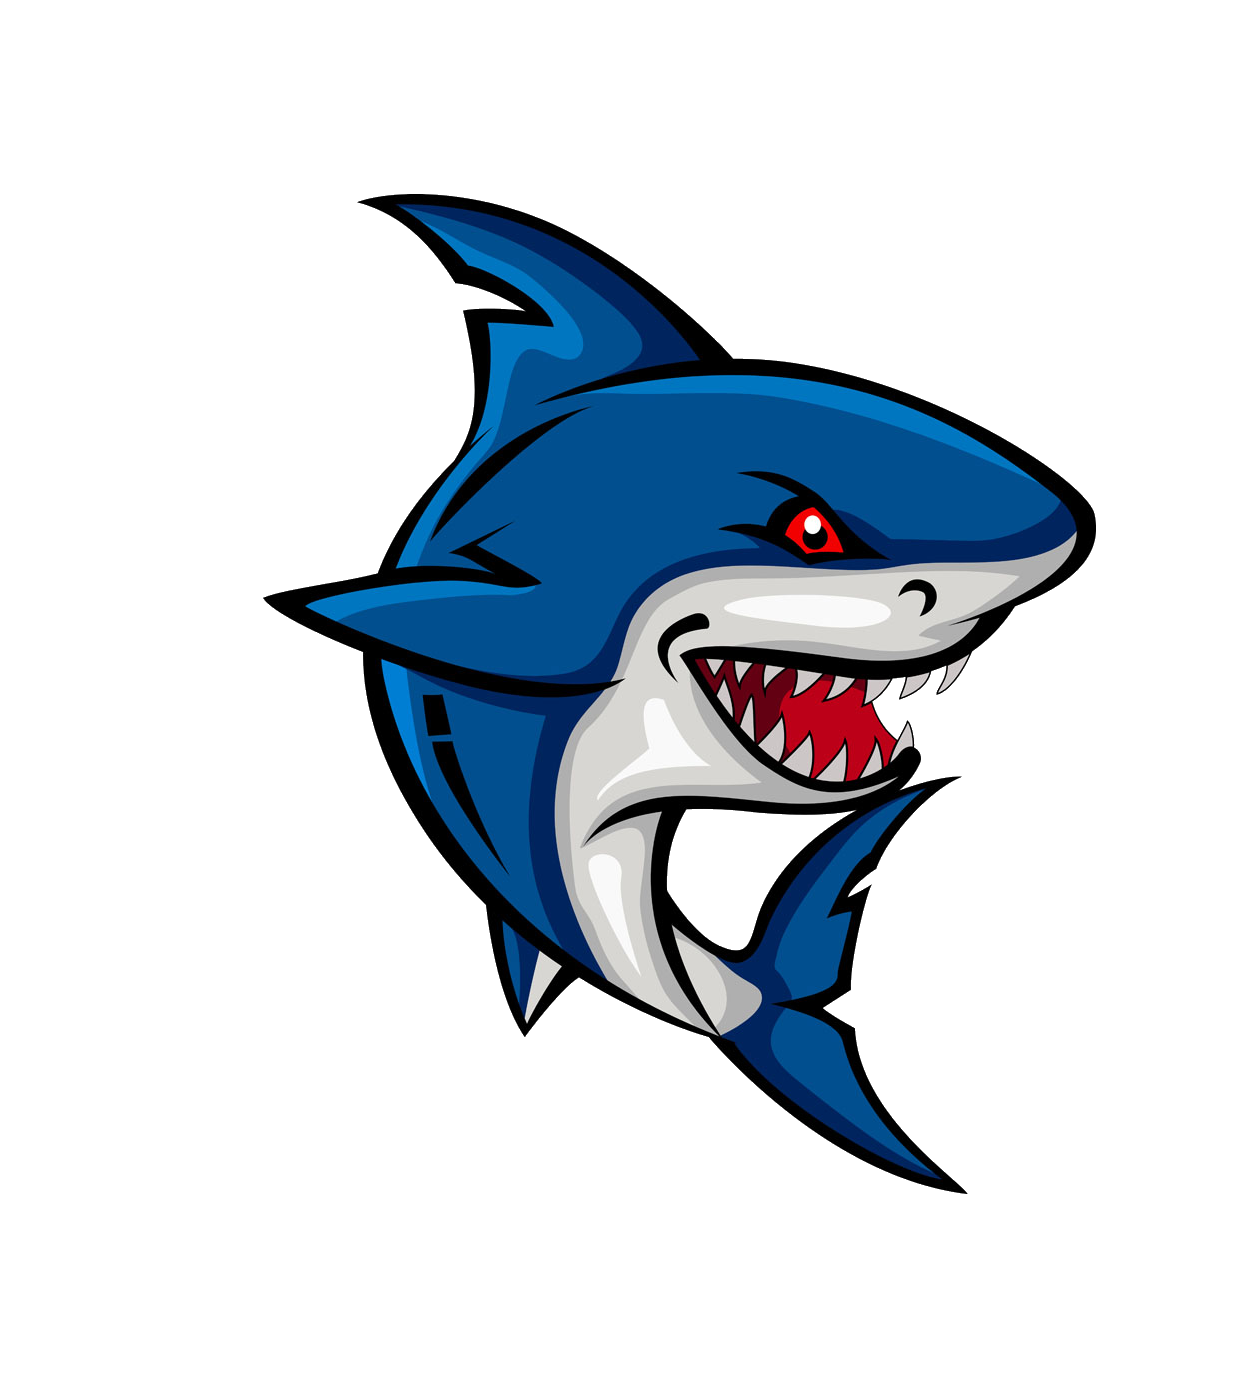 Free Cartoon Shark Cliparts, Download Free Cartoon Shark Cliparts png images, Free ClipArts on ...